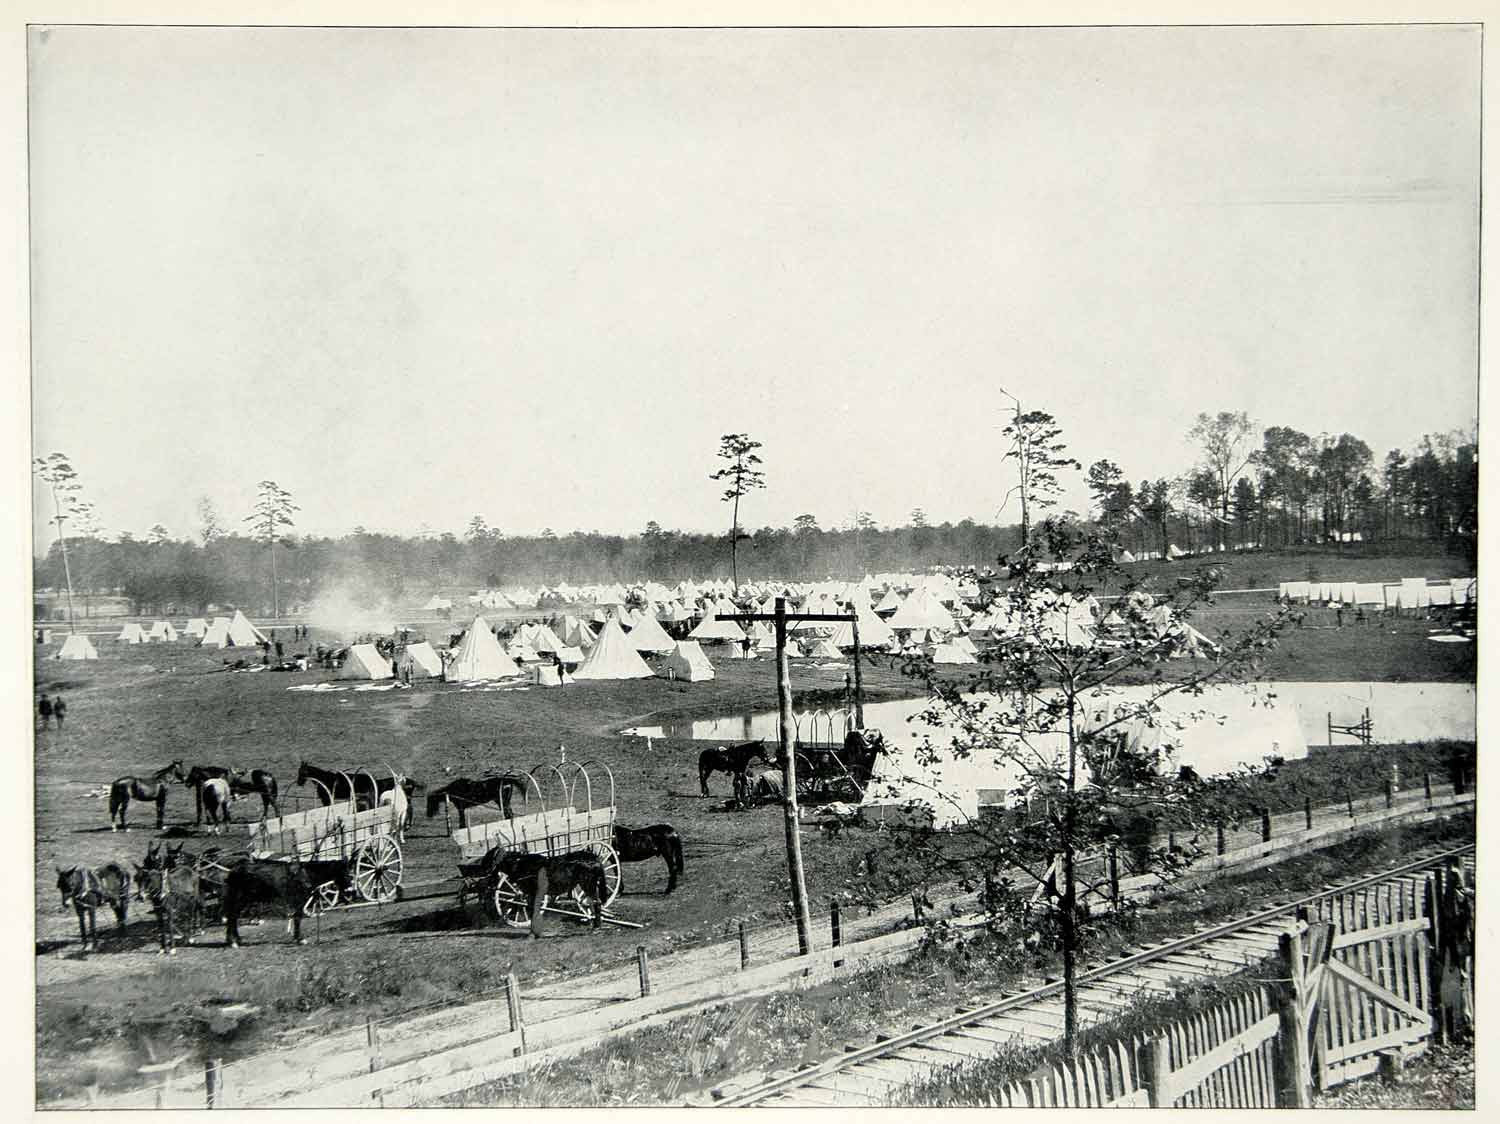 1898 Print Spanish American War Camp Chickamauga Military Encampment Image SAW1 - Period Paper
